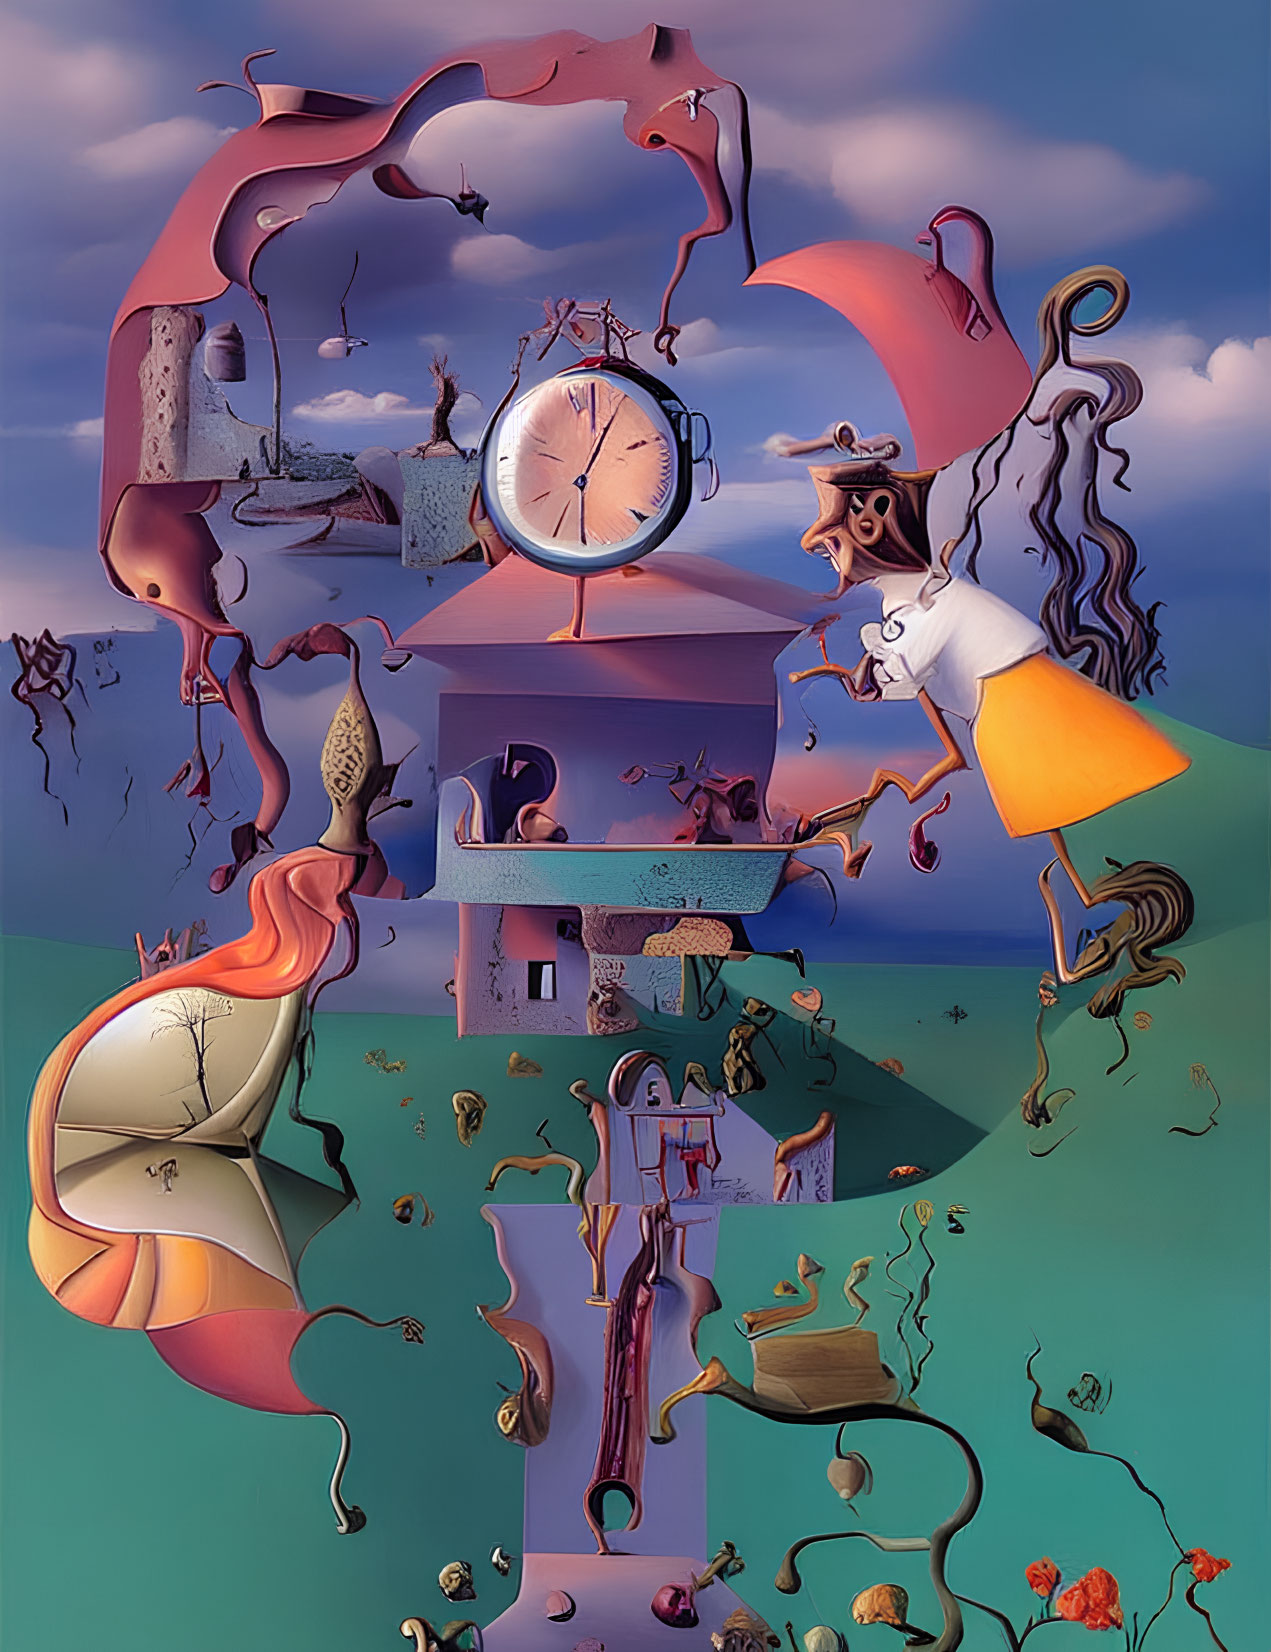 Surreal Artwork: Melting Clocks, Disjointed Figures, Dream-like Elements